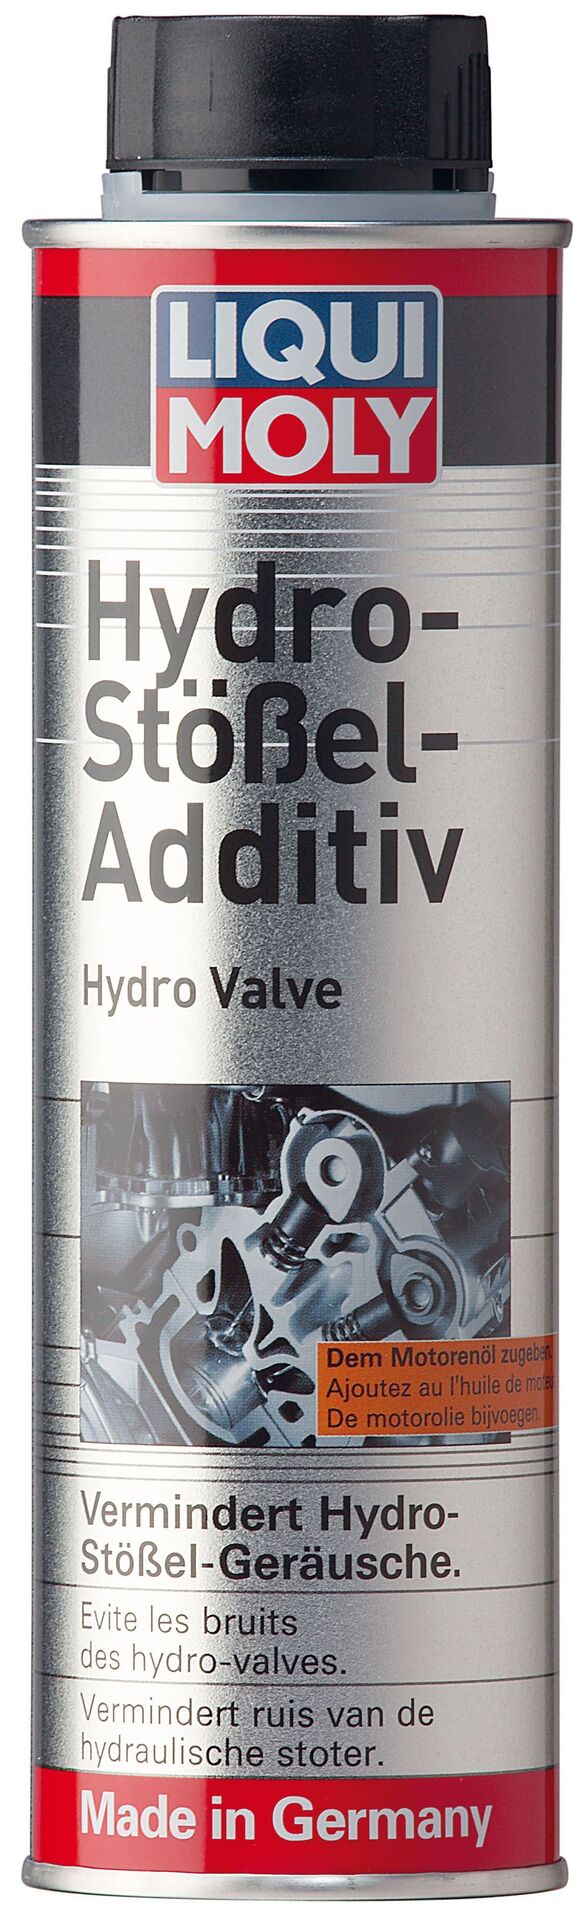 Liqui Moly Hydro-Stössel-Additiv